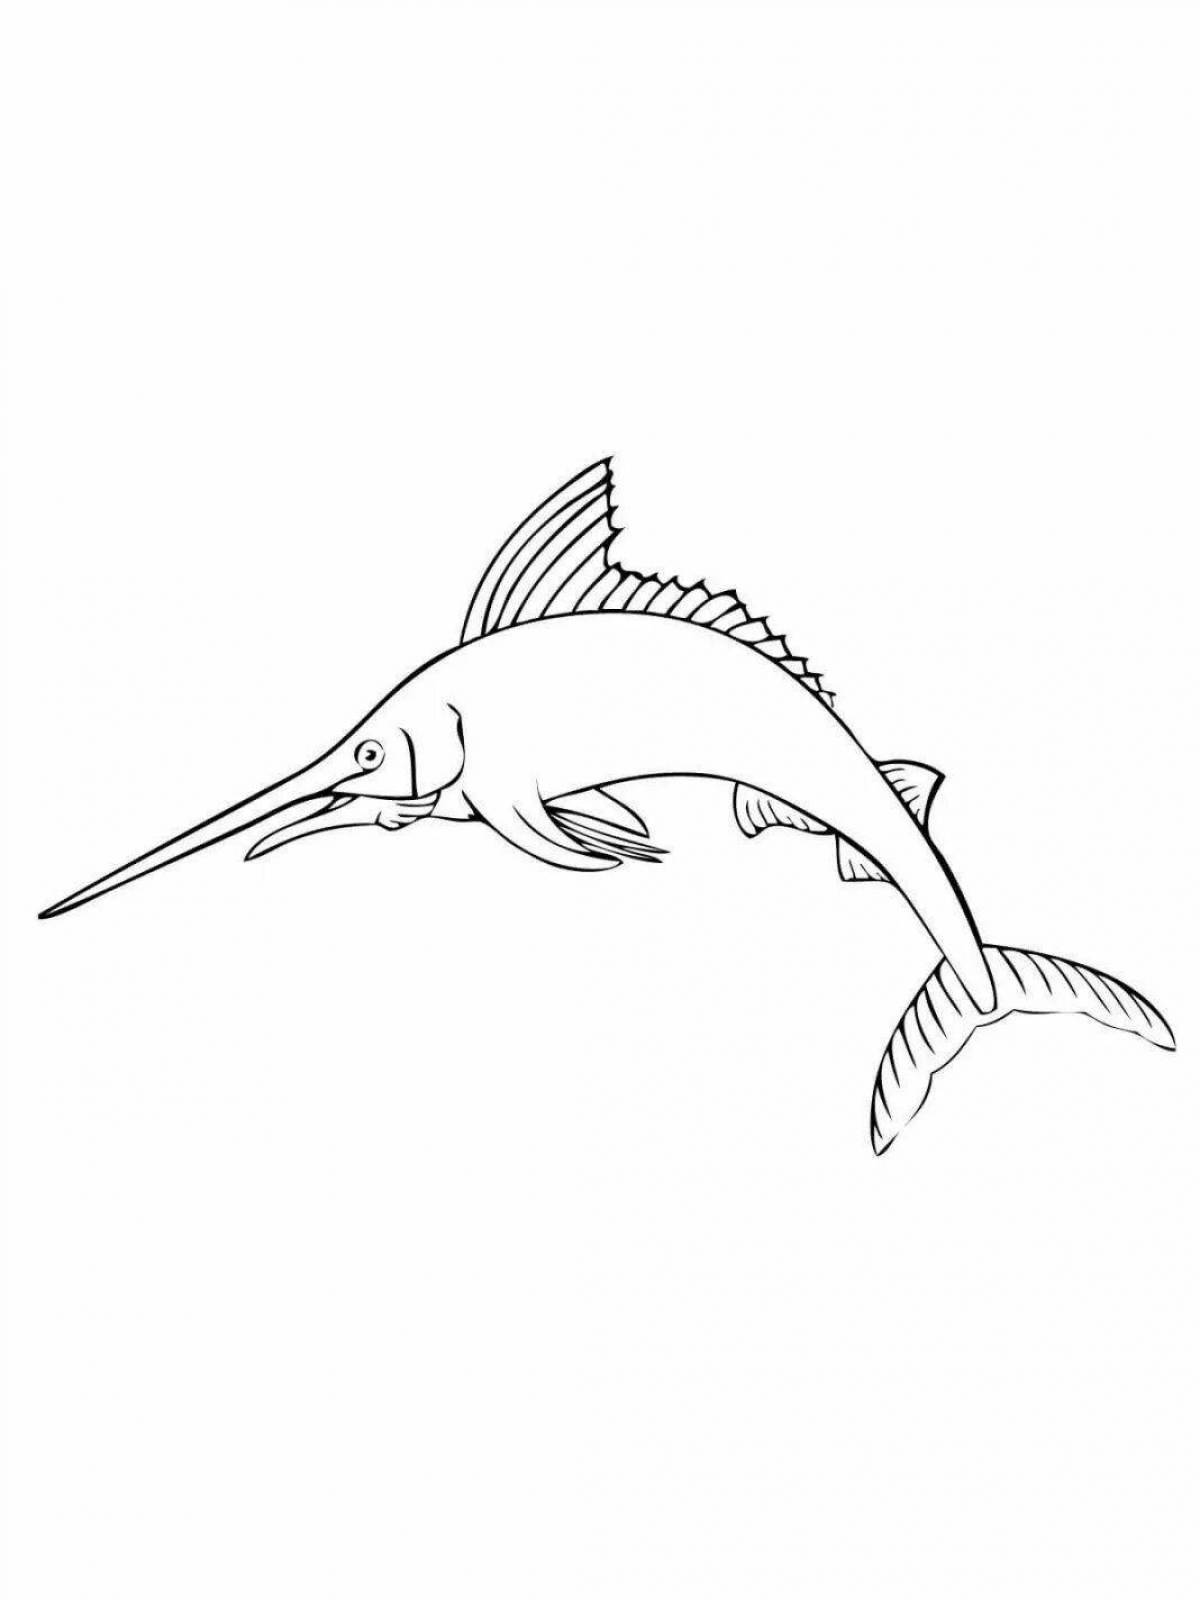 Exquisite swordfish coloring page